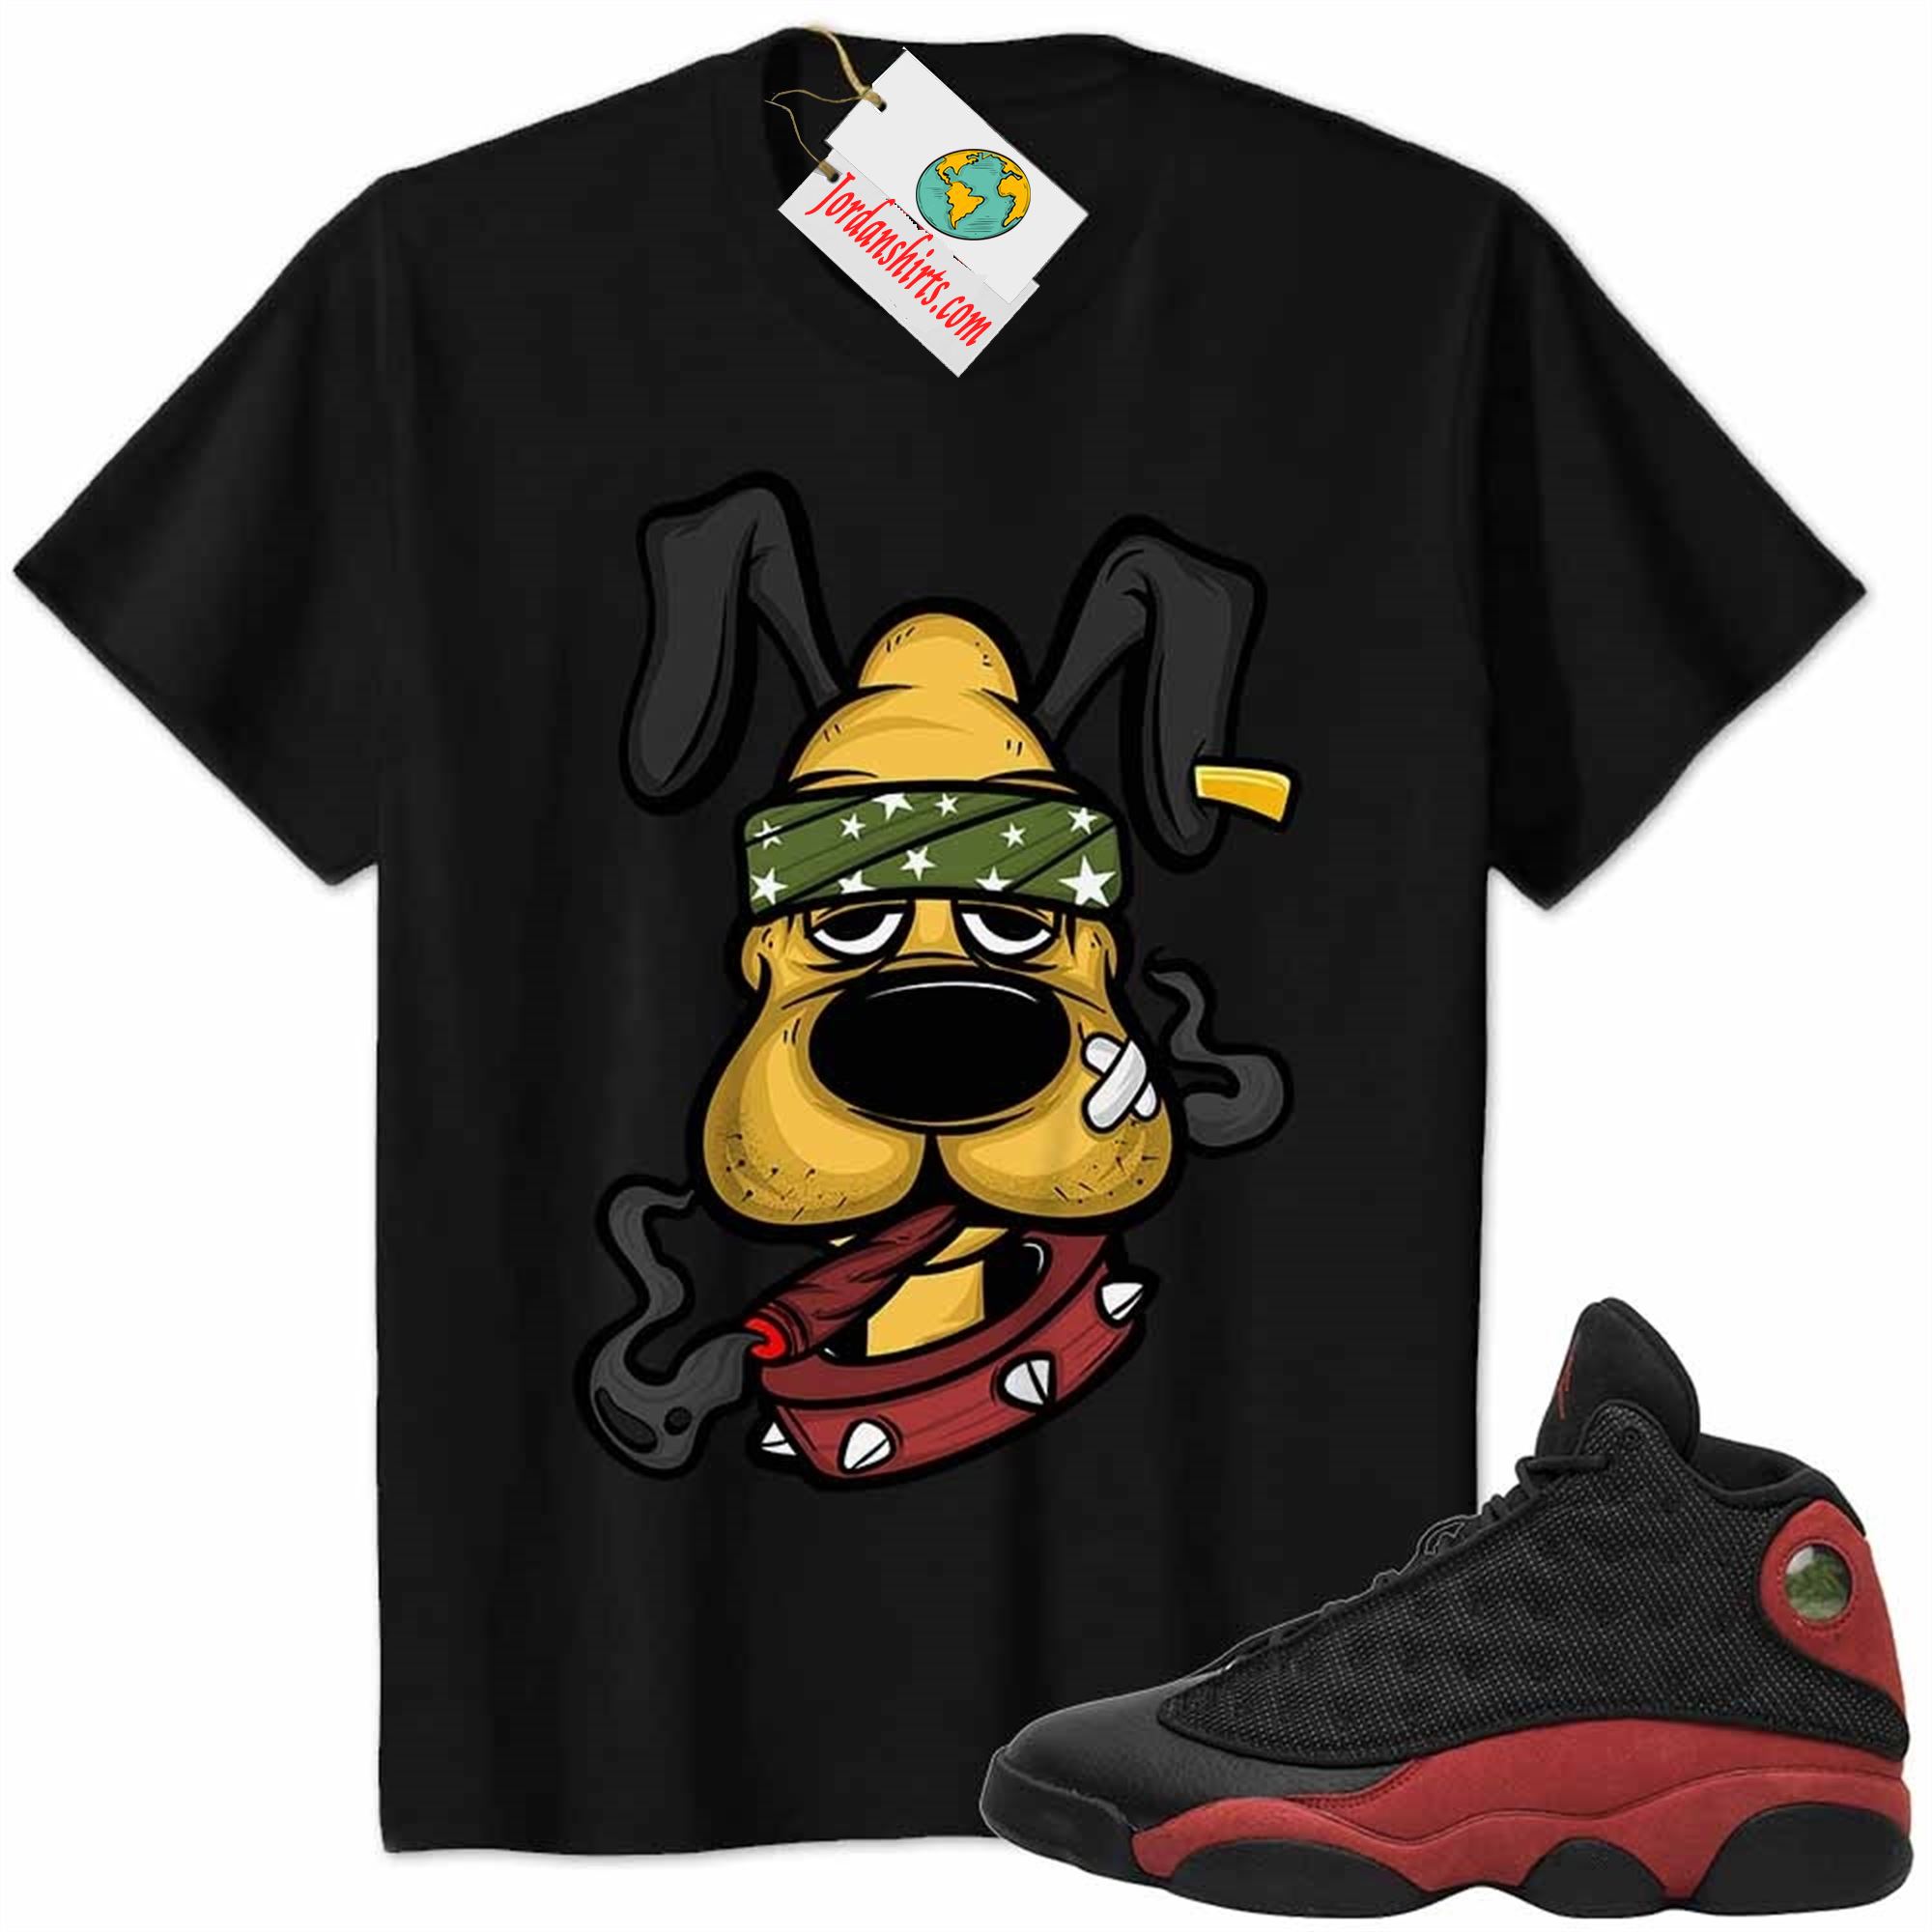 Jordan 13 Shirt, Gangster Pluto Smoke Weed Black Air Jordan 13 Bred 13s Full Size Up To 5xl